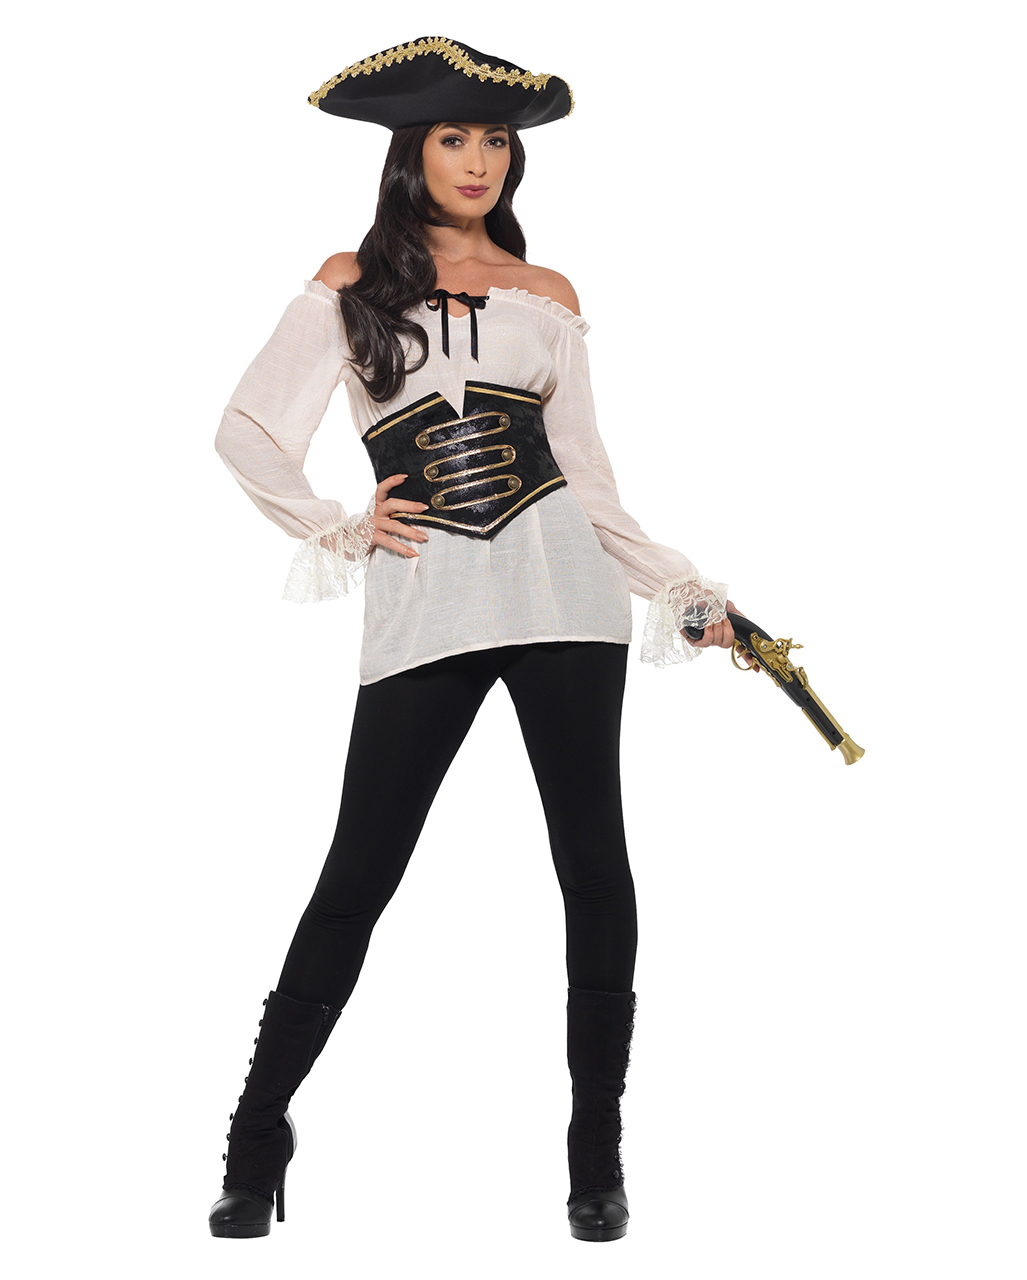 Pef hemel Cordelia Deluxe Pirate Blouse With Corset buy HERE ➔ | Horror-Shop.com